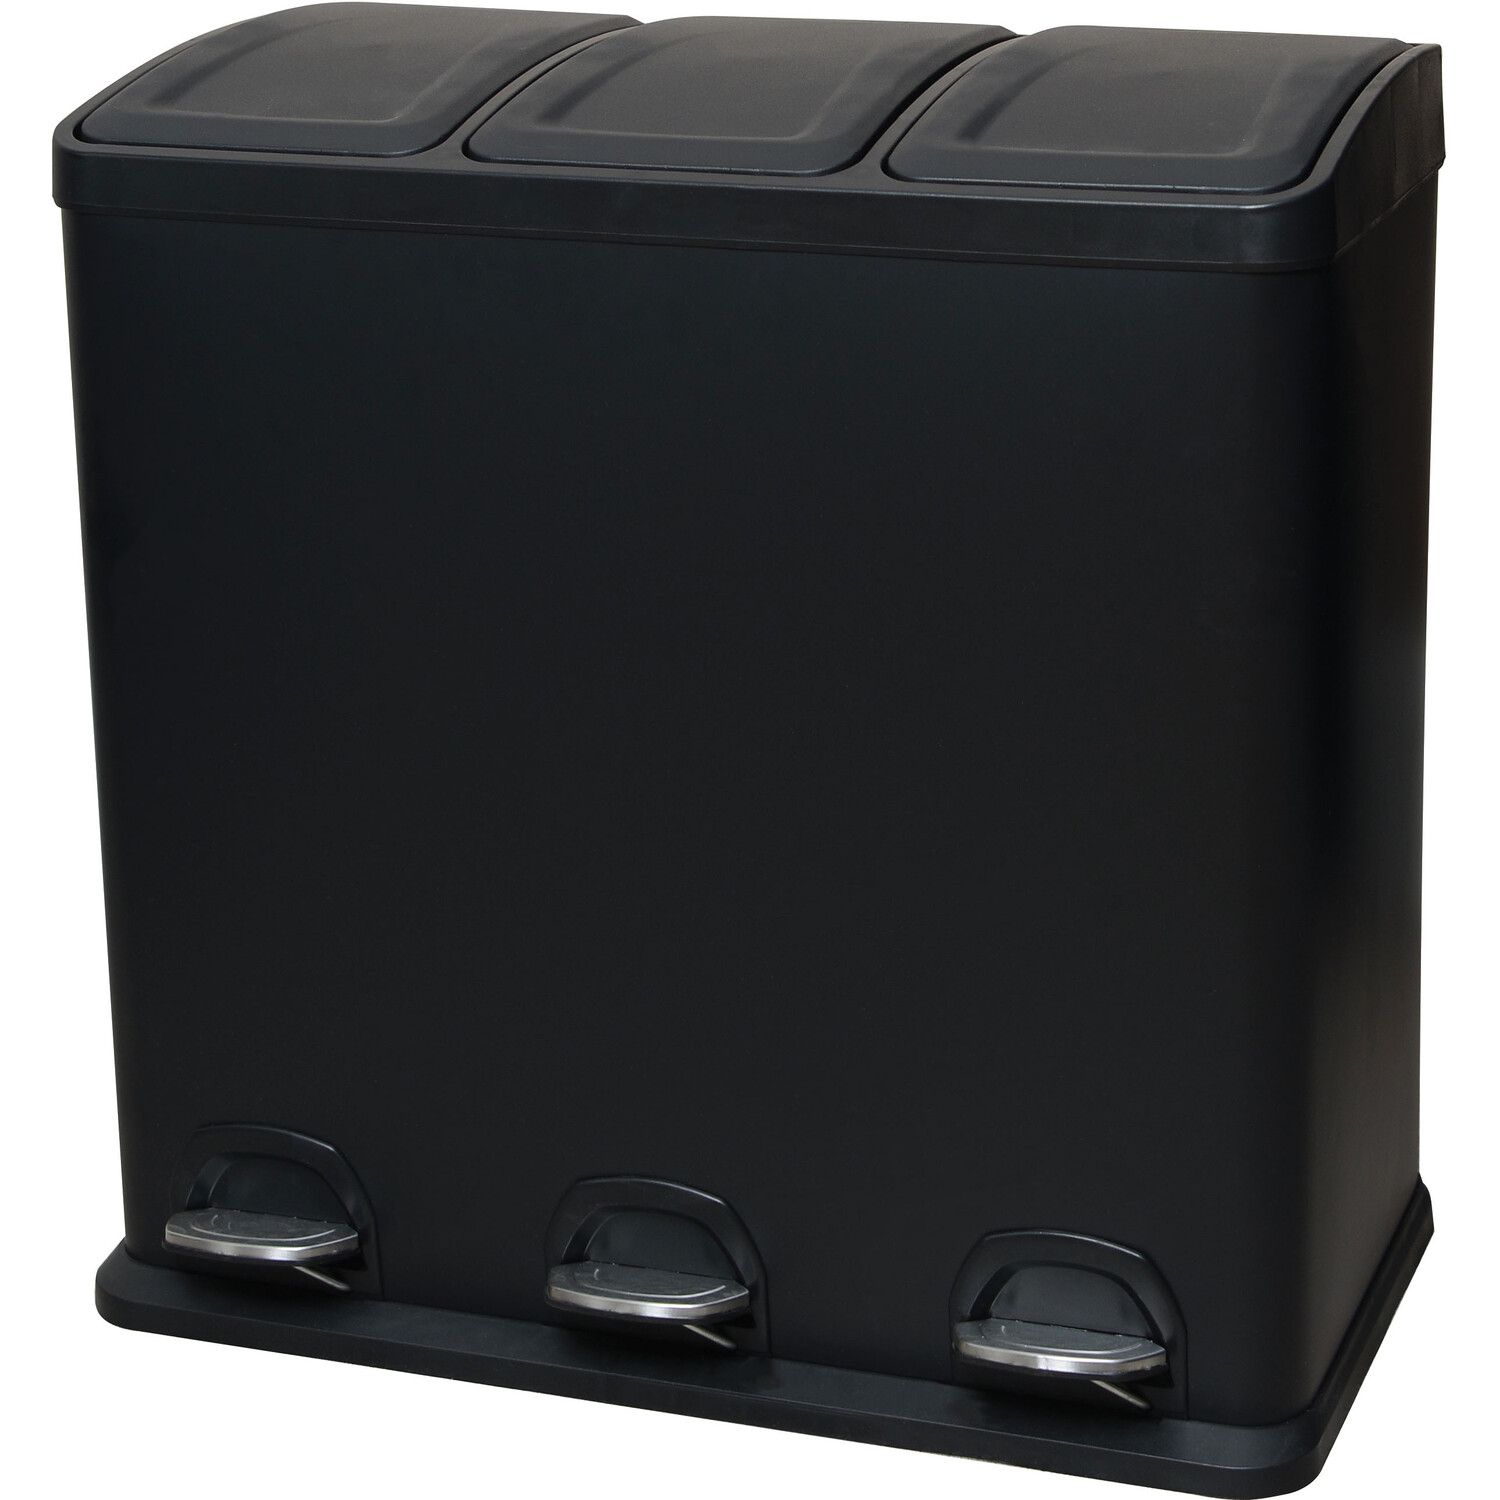 Black Three Compartment Recycle Bin 60L Image 1